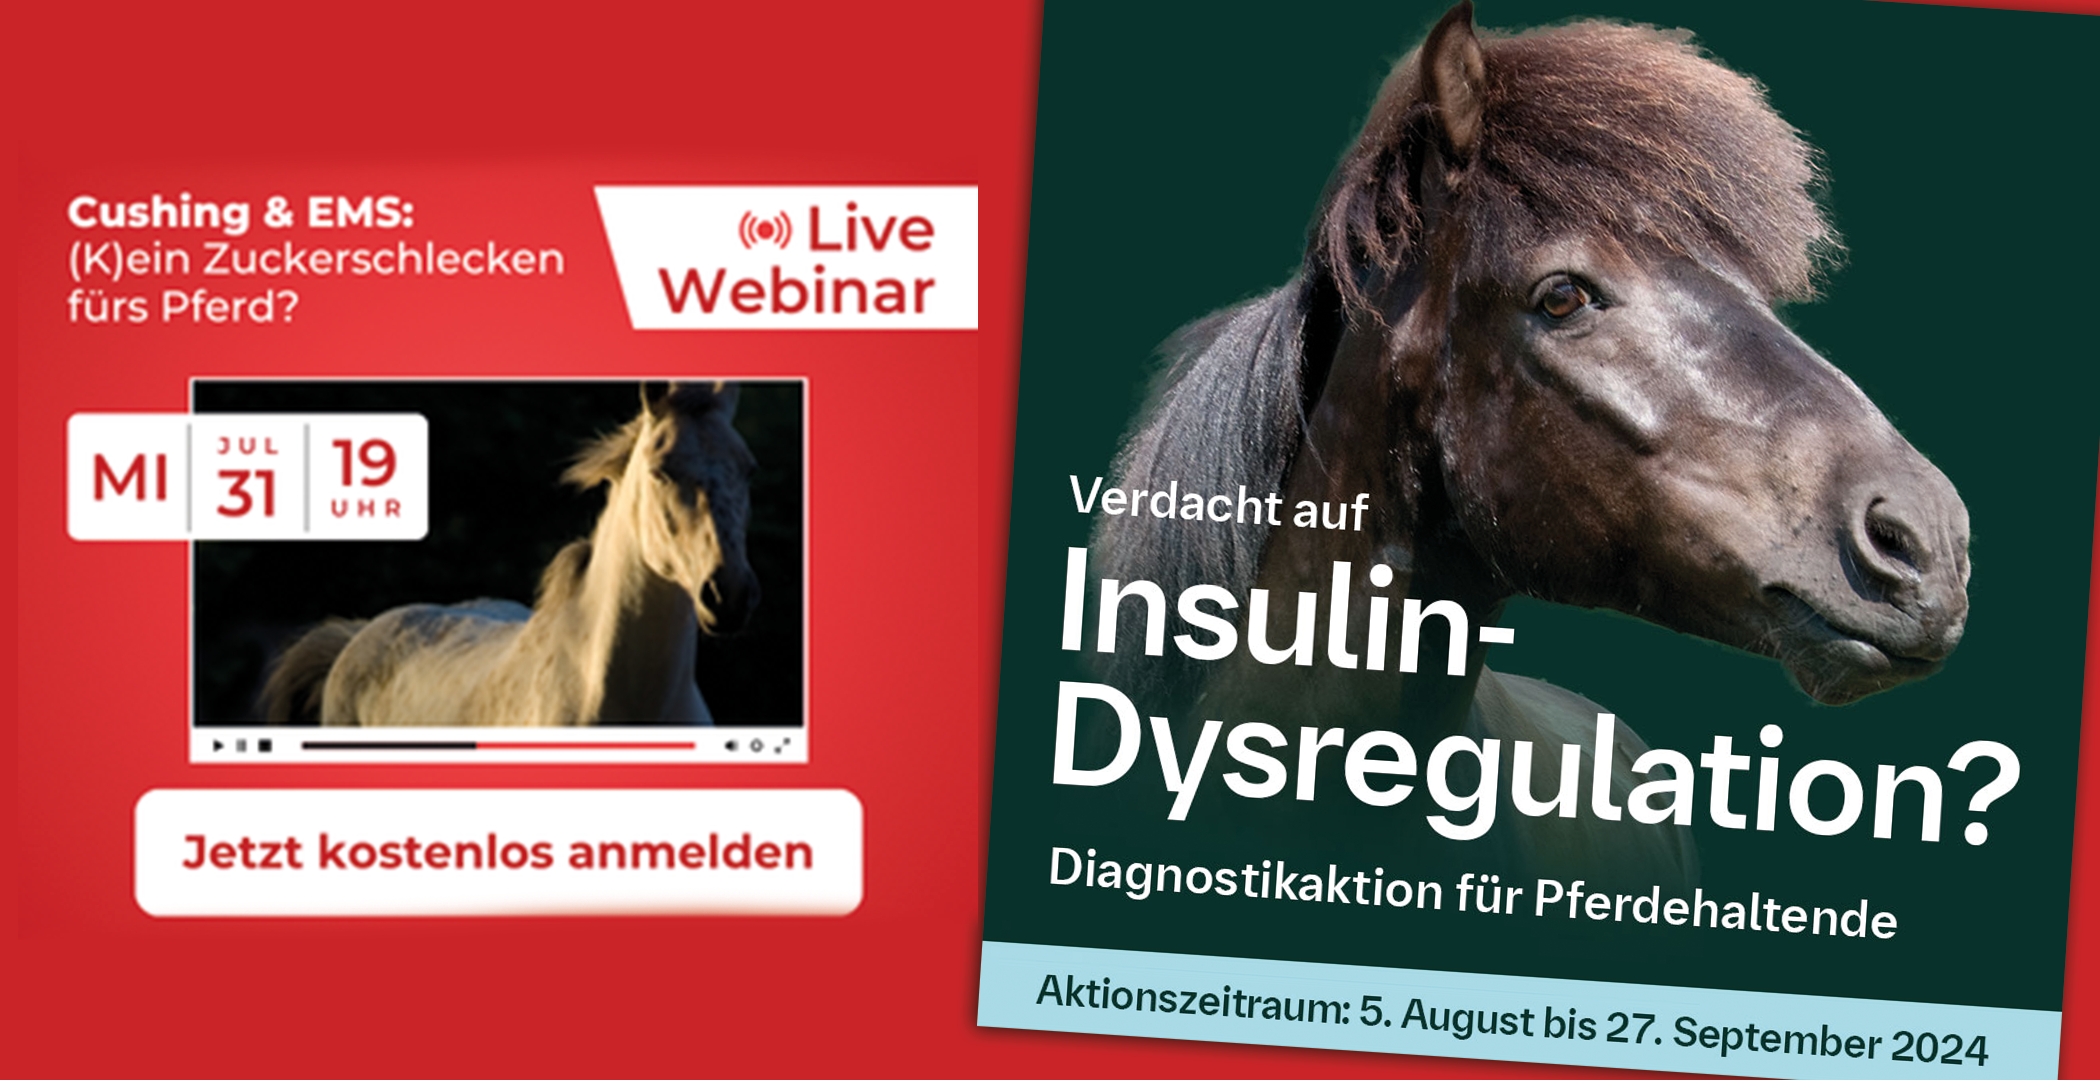 Live-Webinar Cushing und EMS - Diagnostikaktion Insulin-Dysregulation